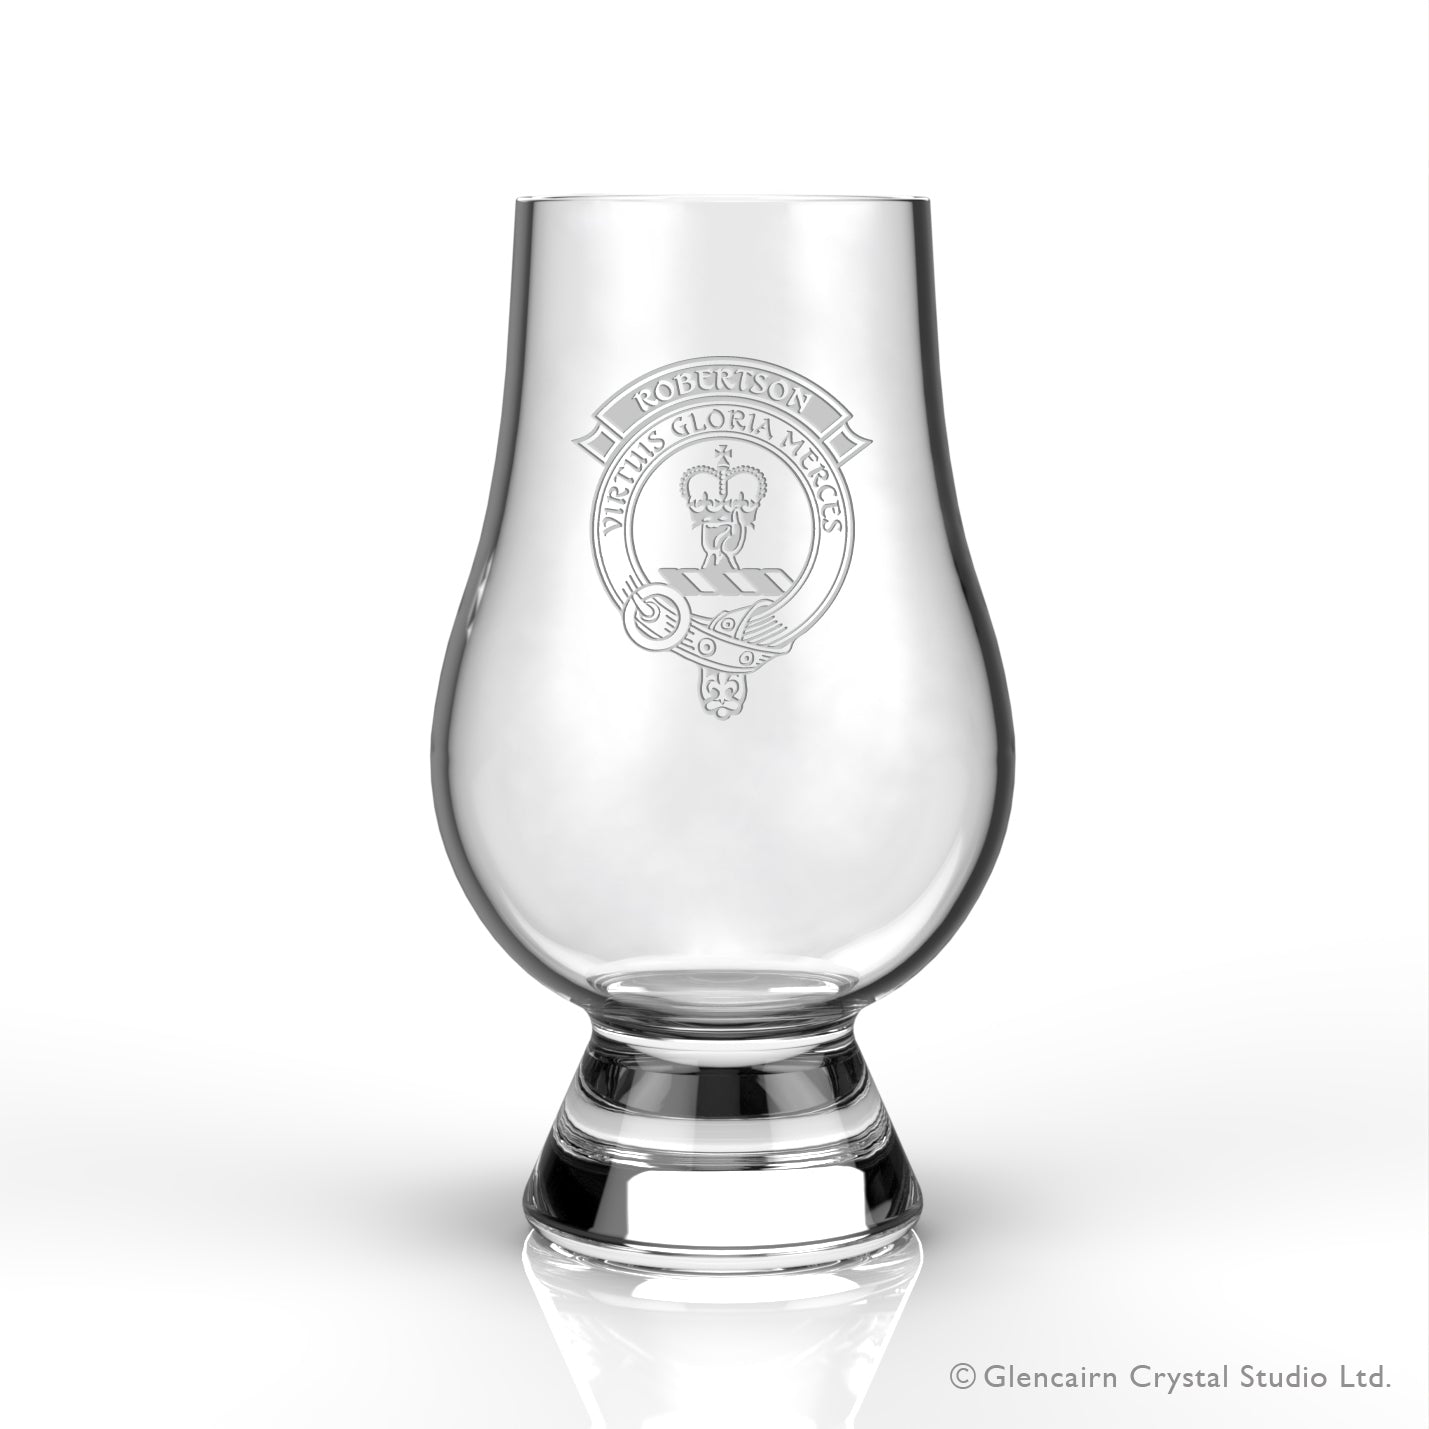 Robertson Clan Glencairn Glass